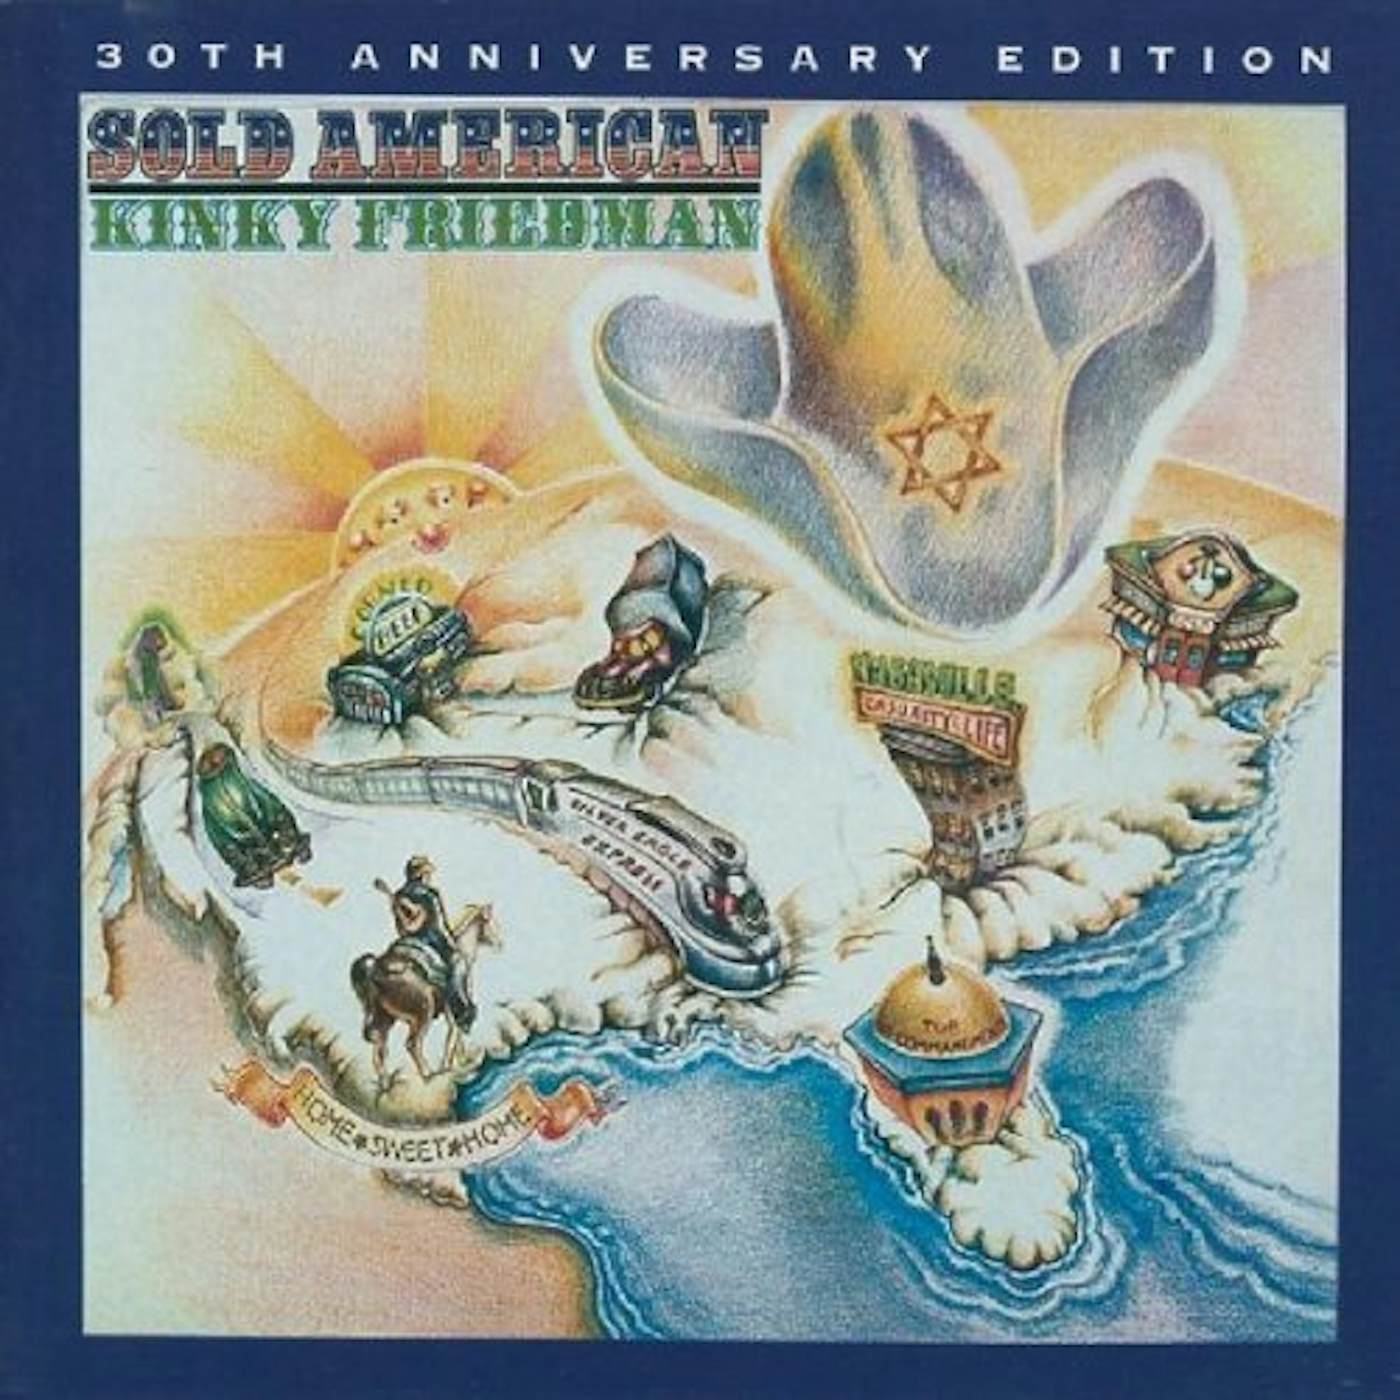 Kinky Friedman SOLD AMERICAN CD